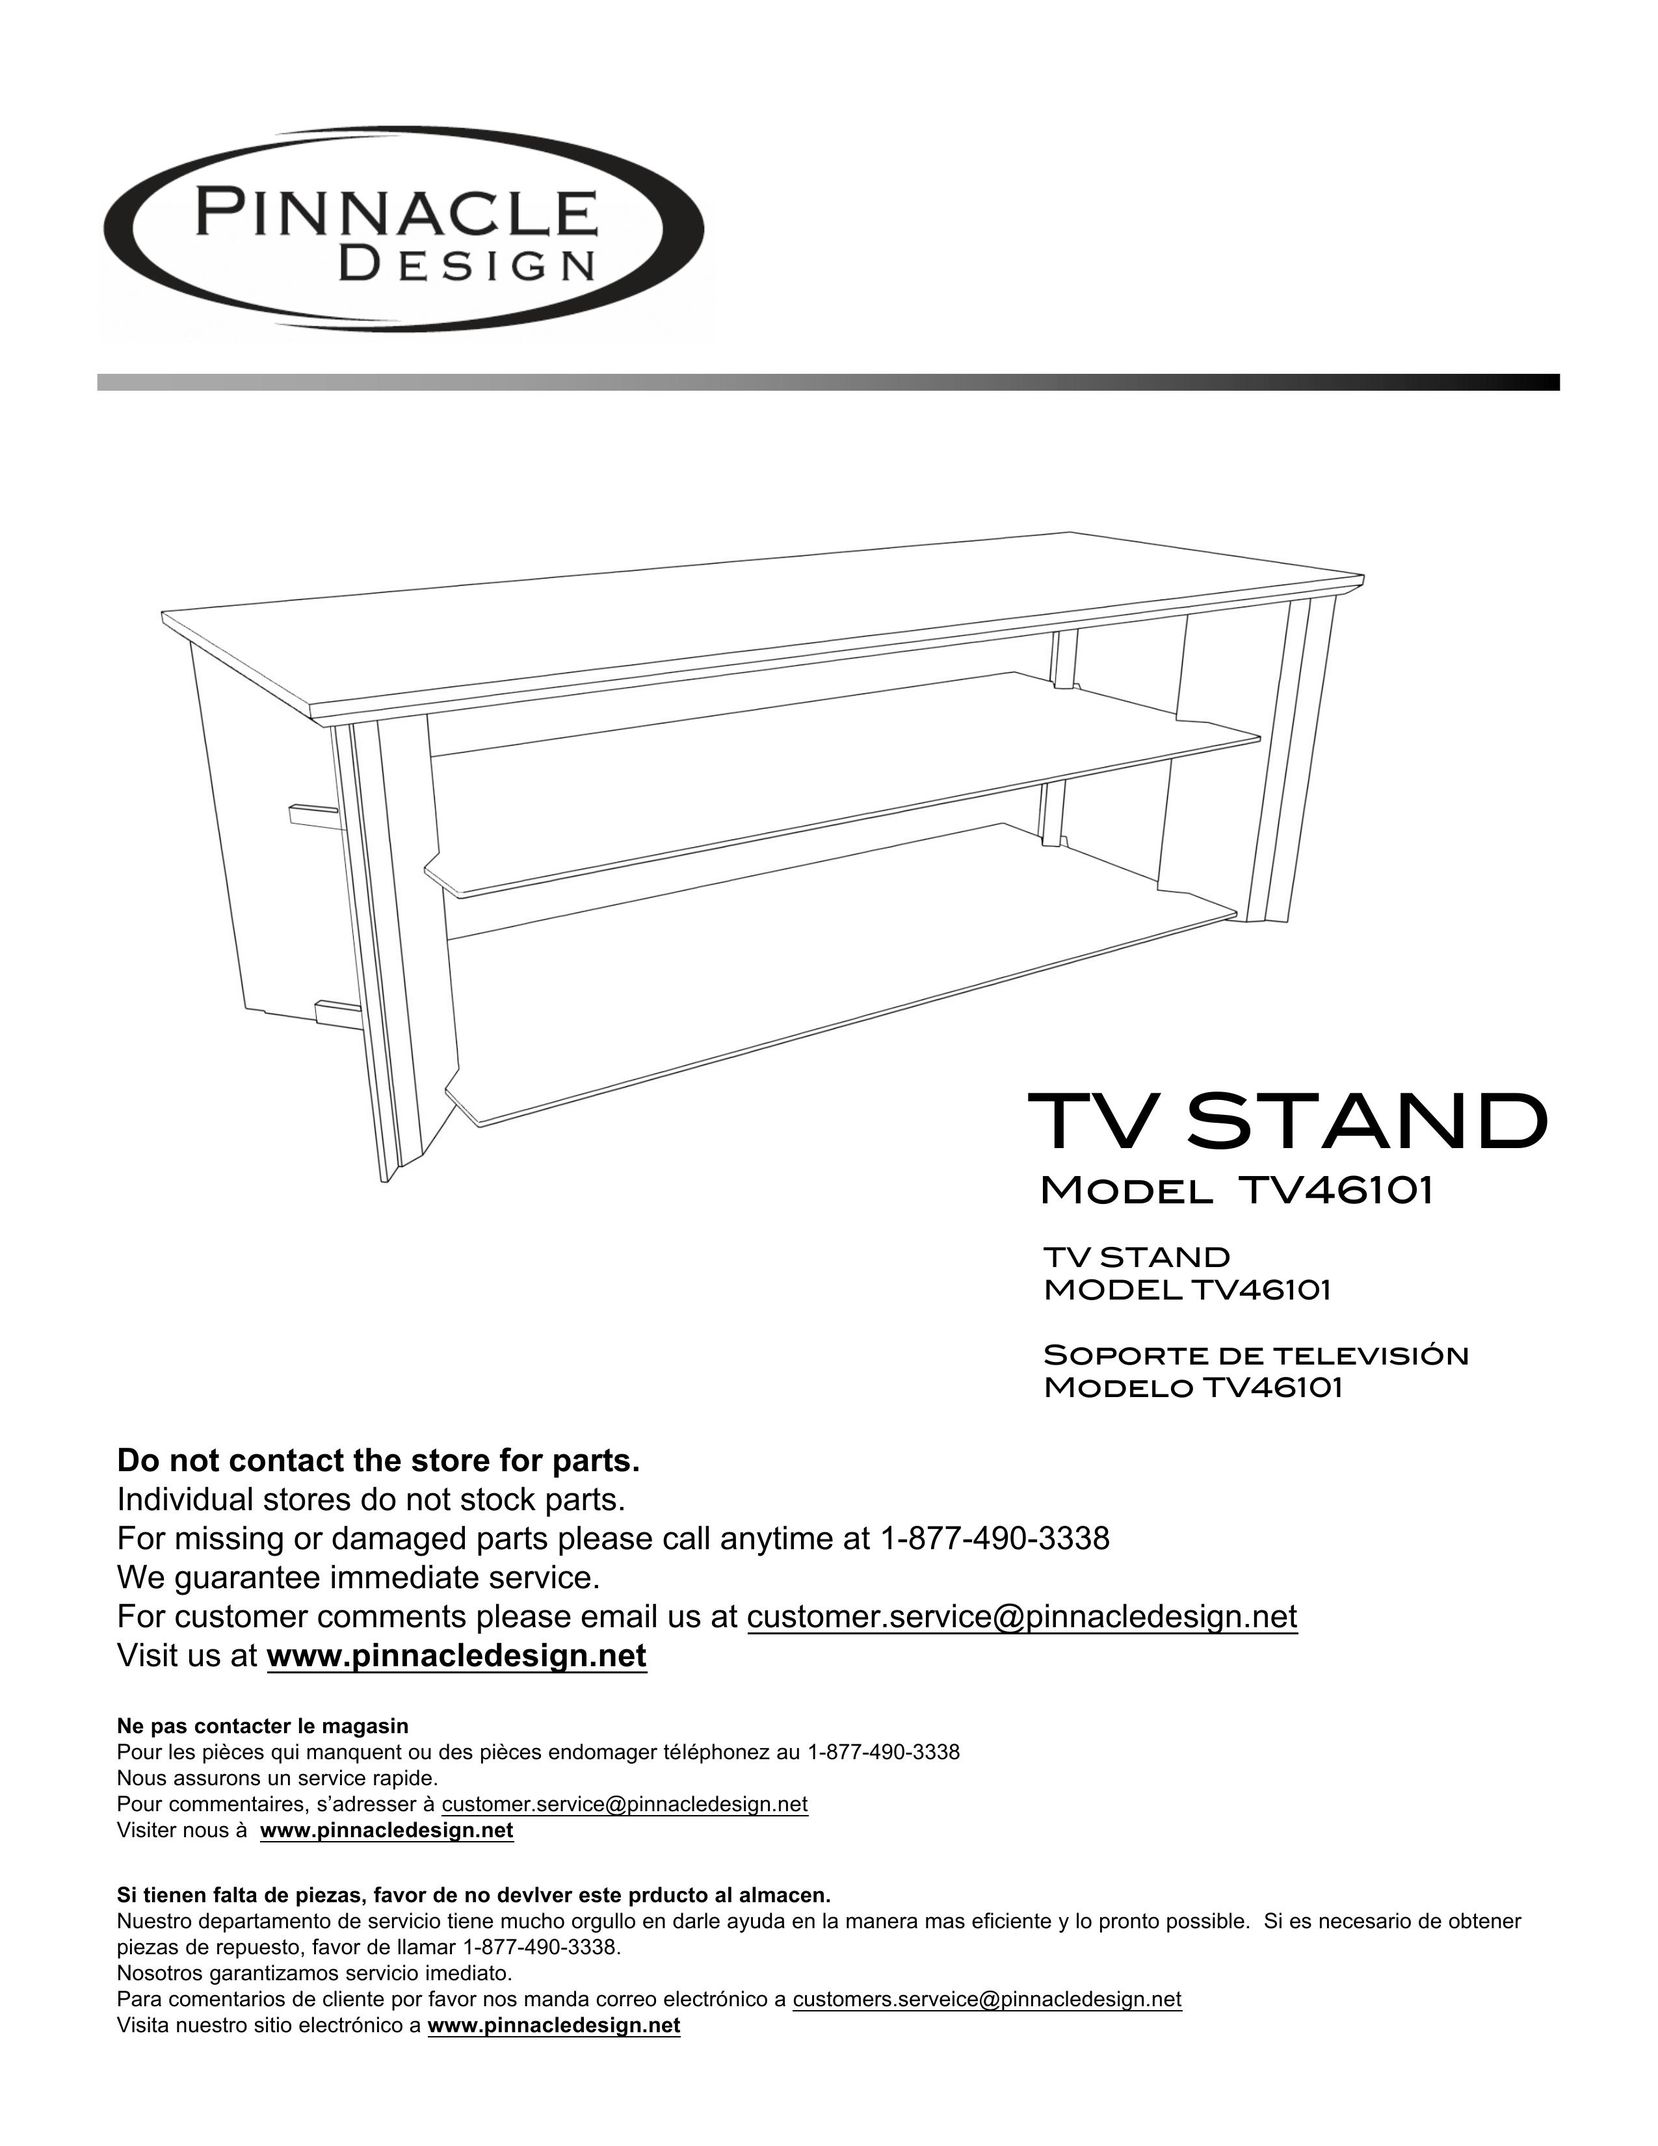 Pinnacle Design TV46101 TV Video Accessories User Manual